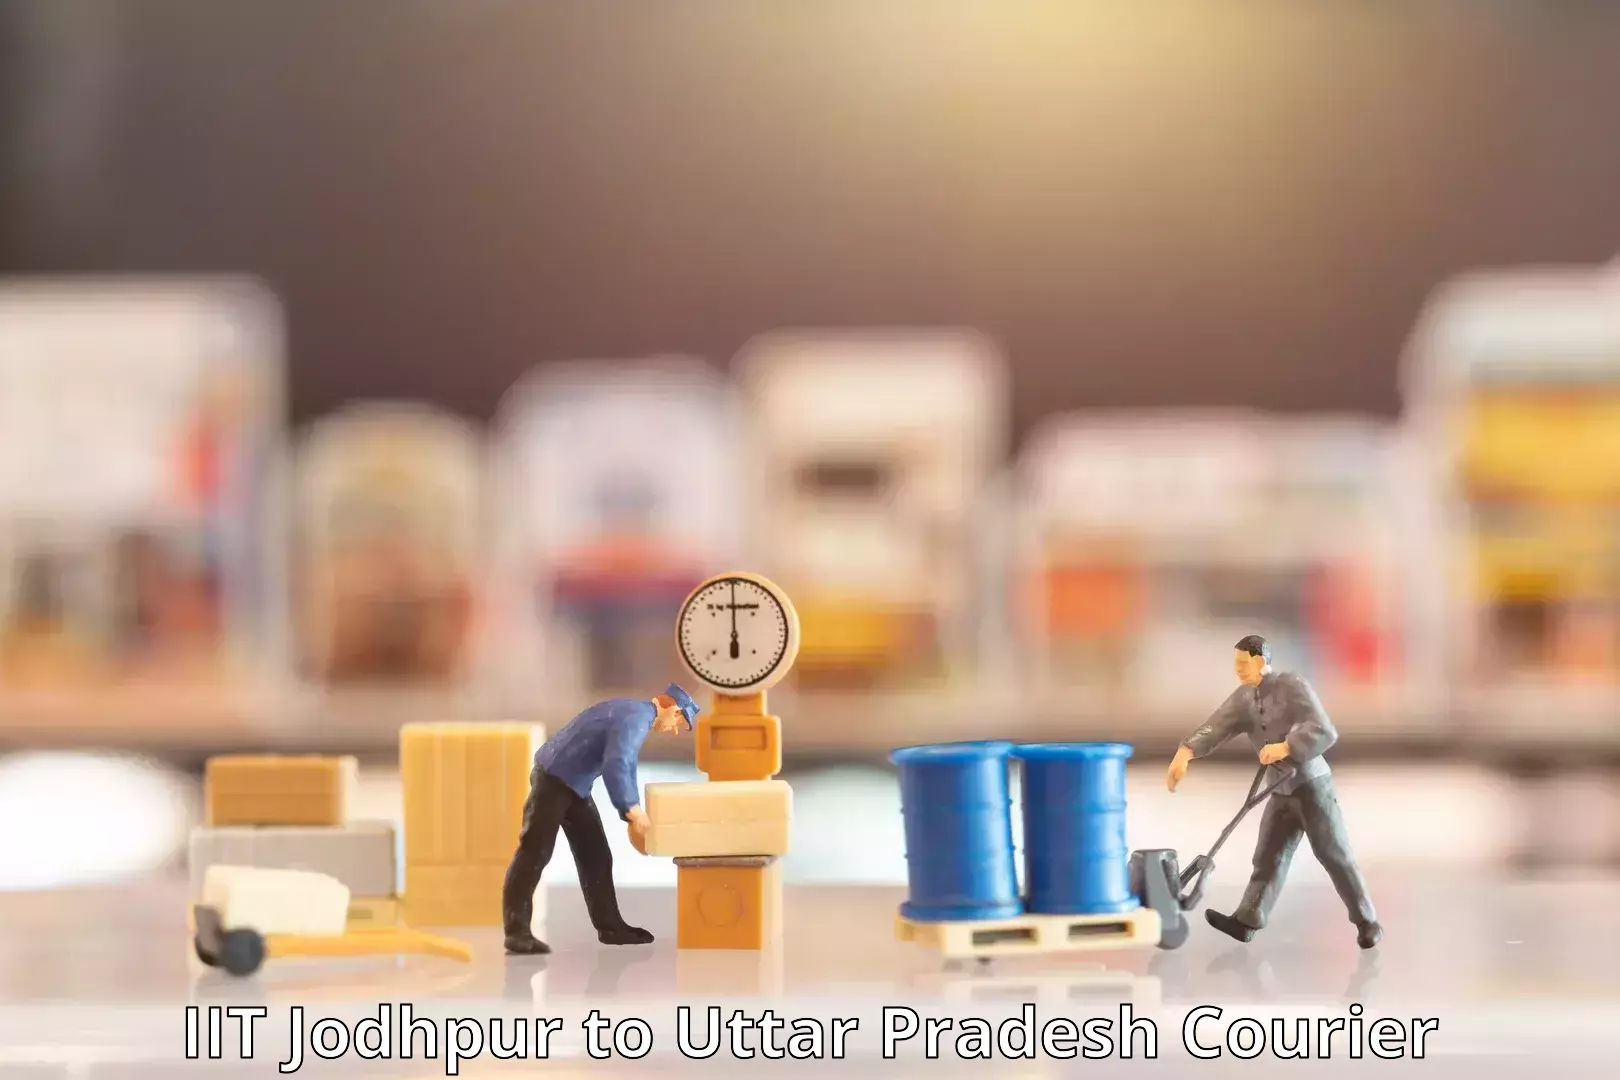 Courier service booking IIT Jodhpur to Khurja